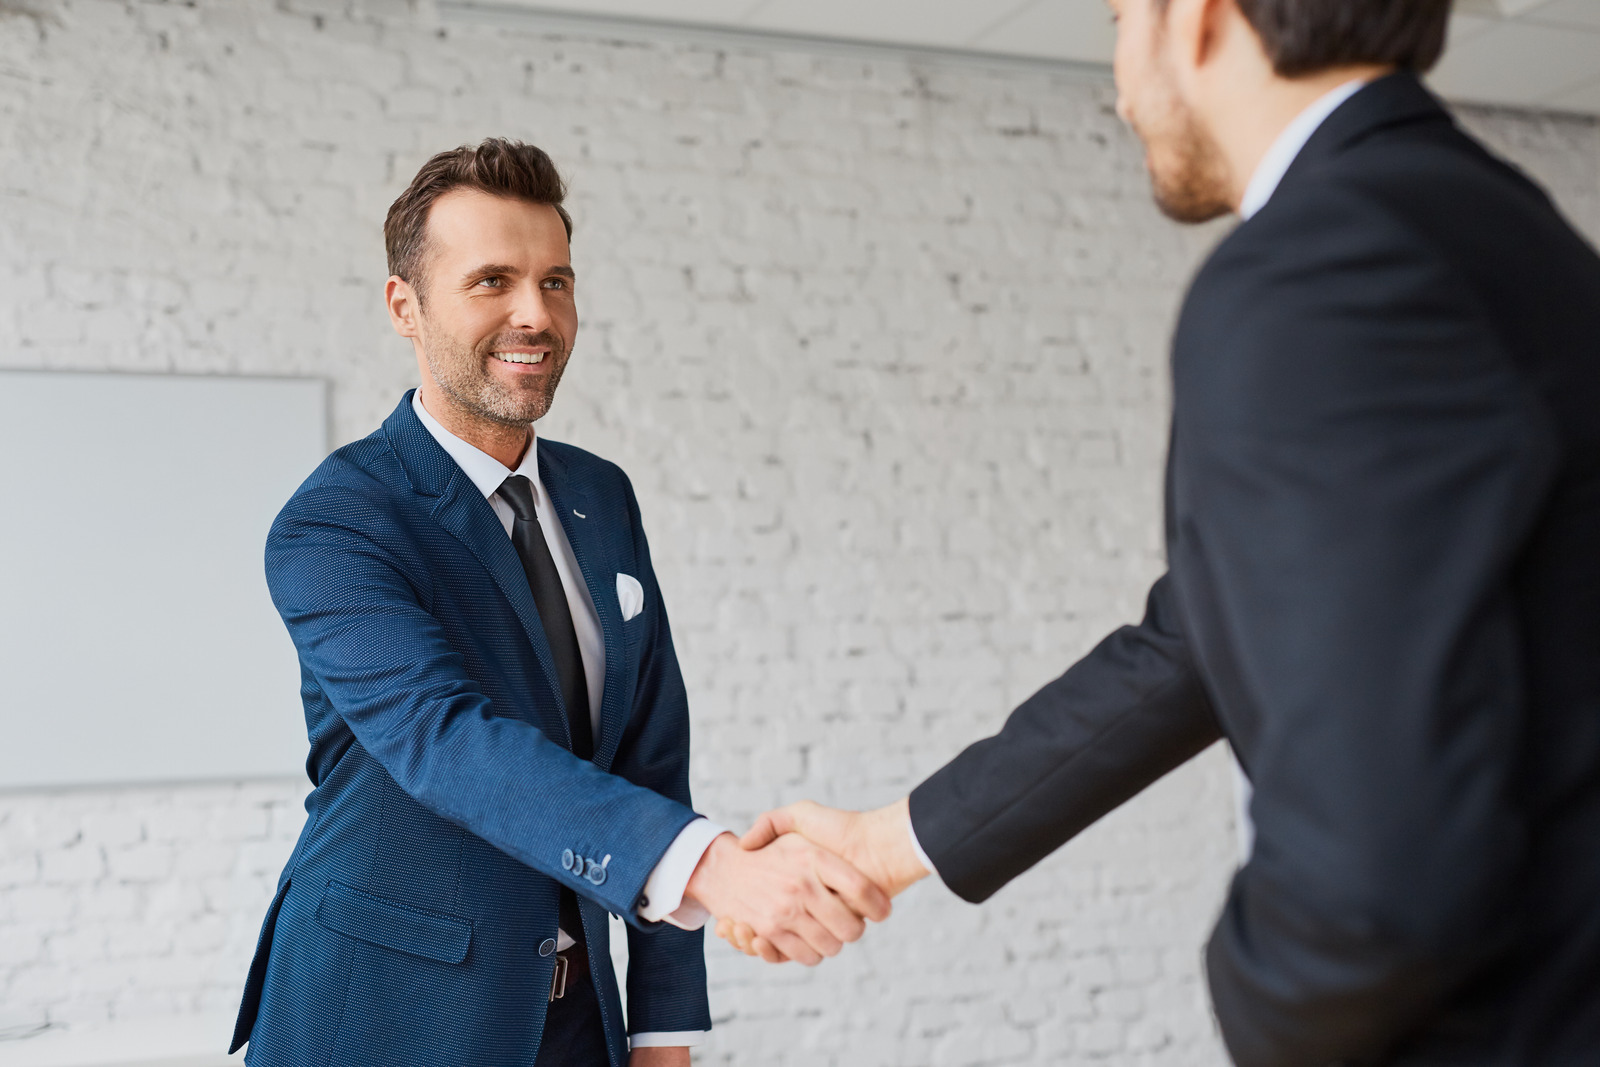 Businessmen handshaking after successful business meeting, negotiation